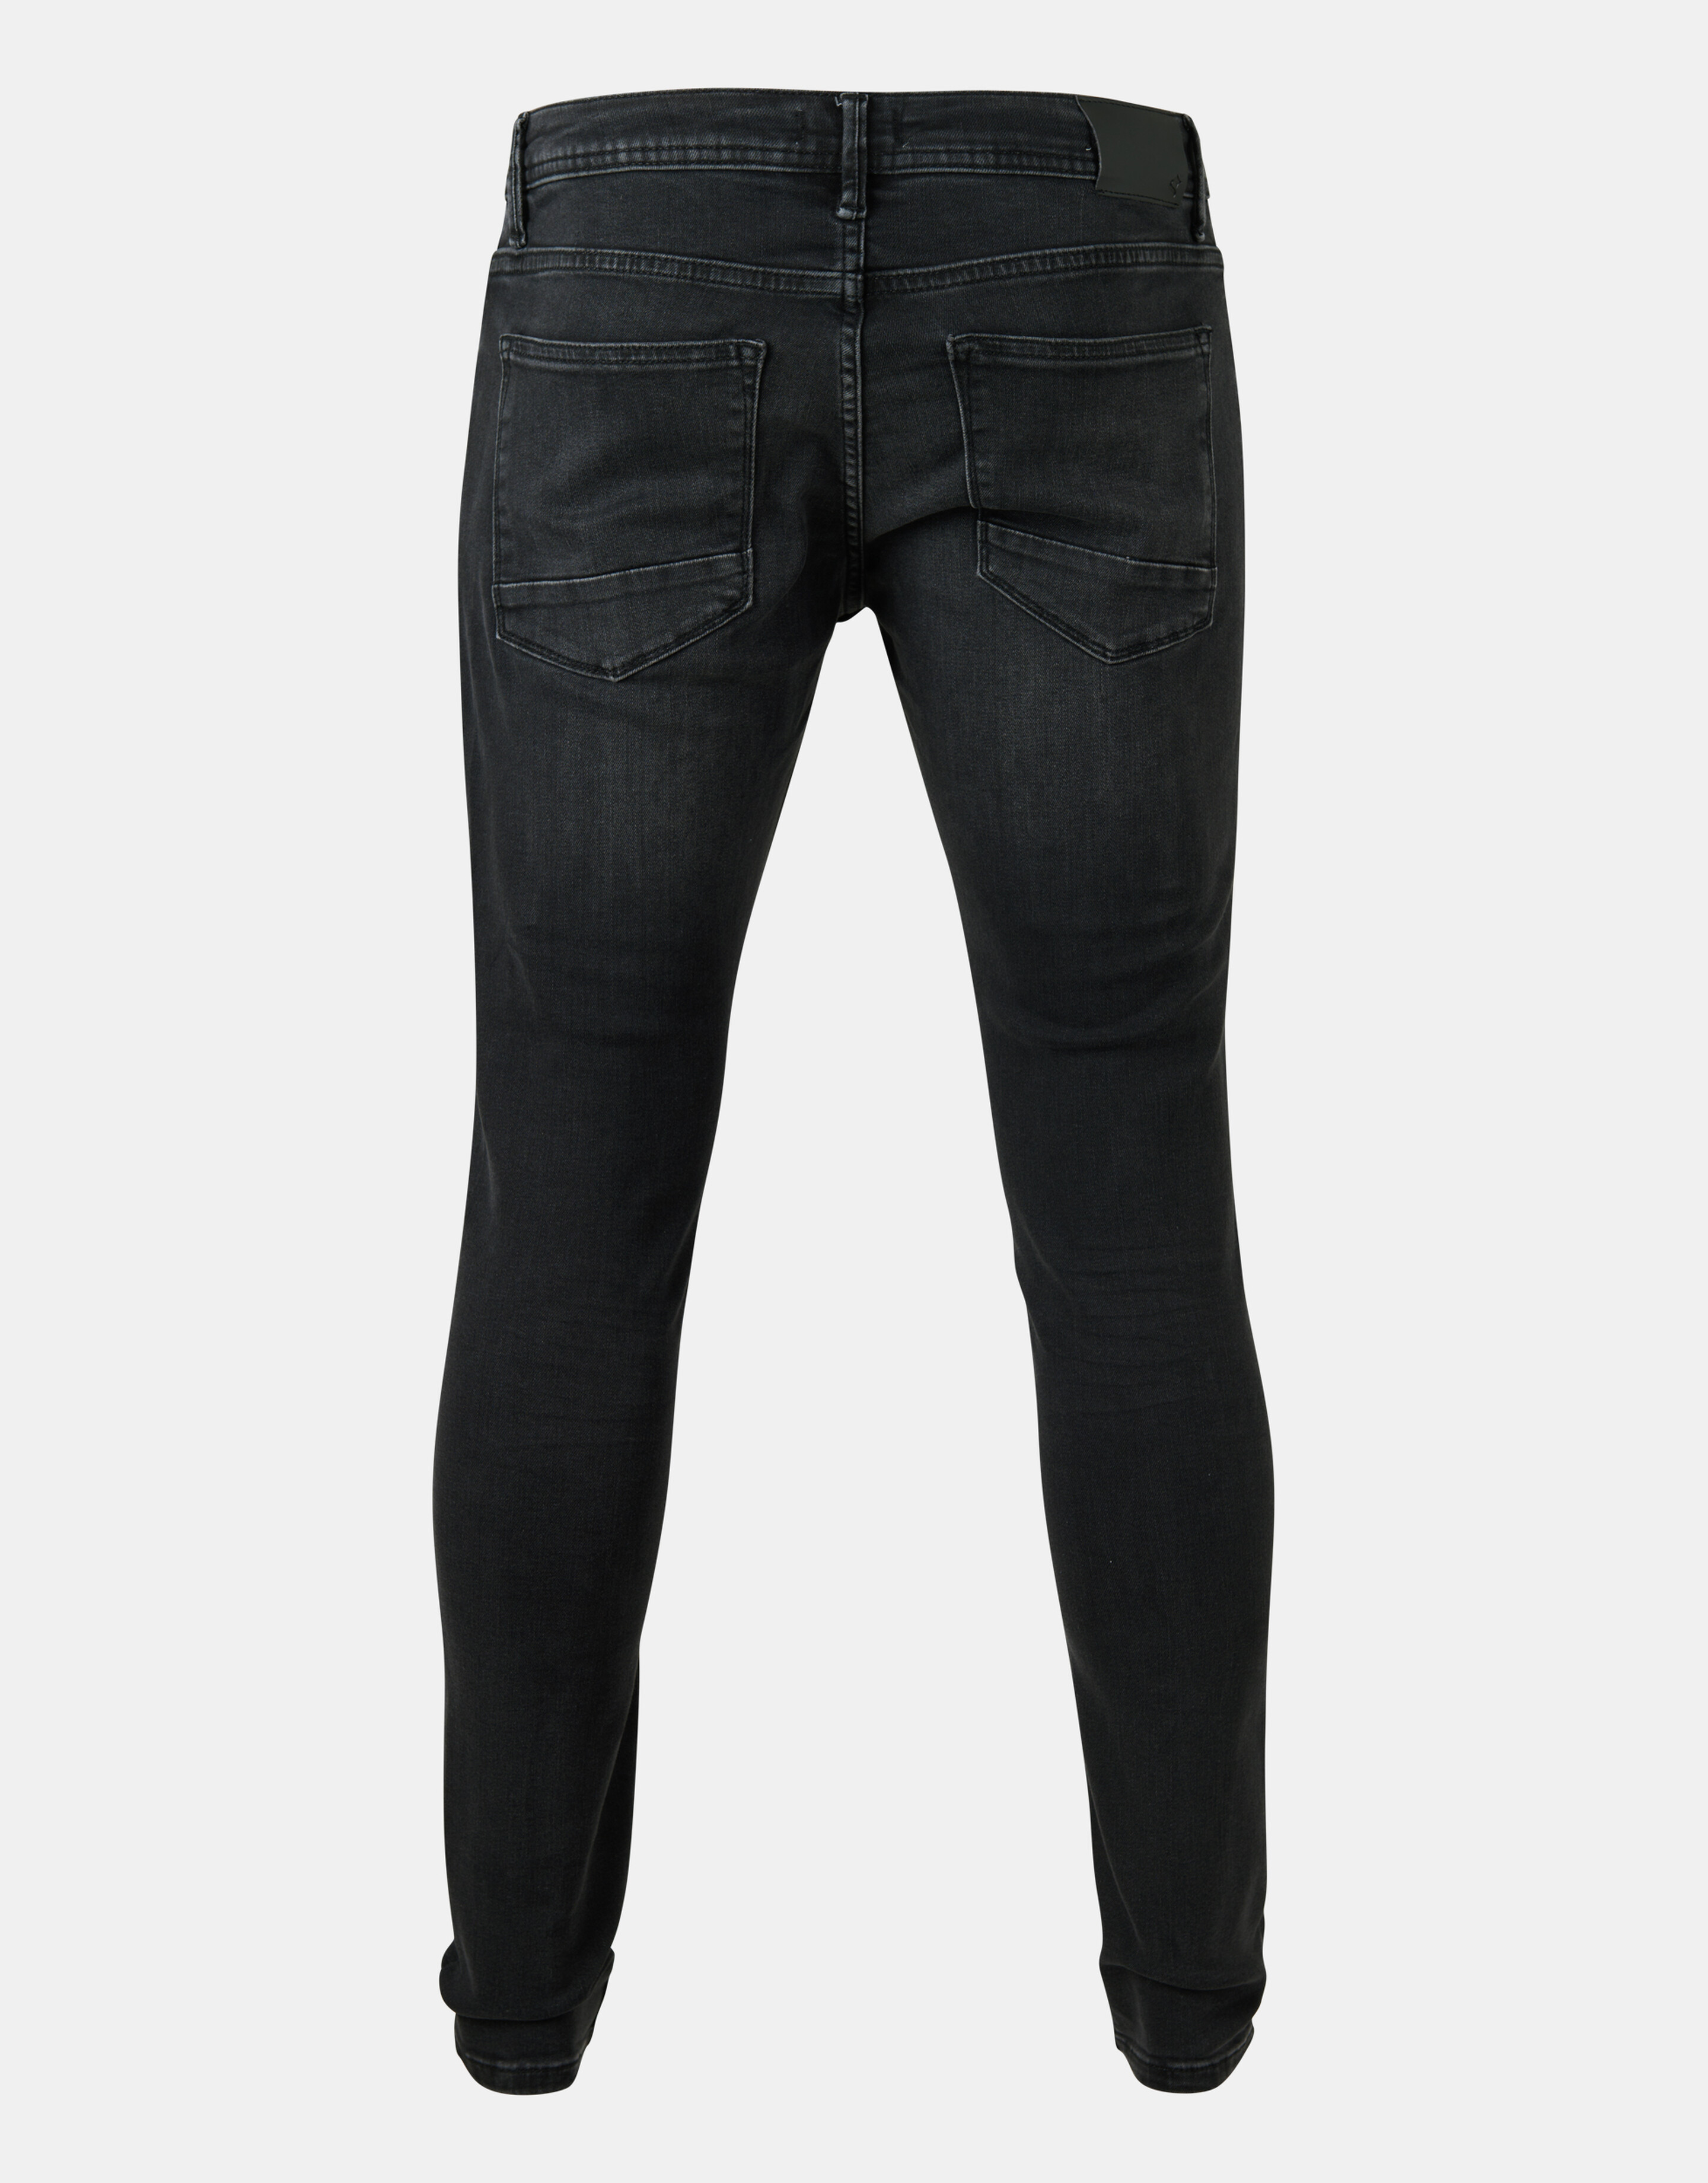 Skinny Jeans Jack Washed Black L32 Refill